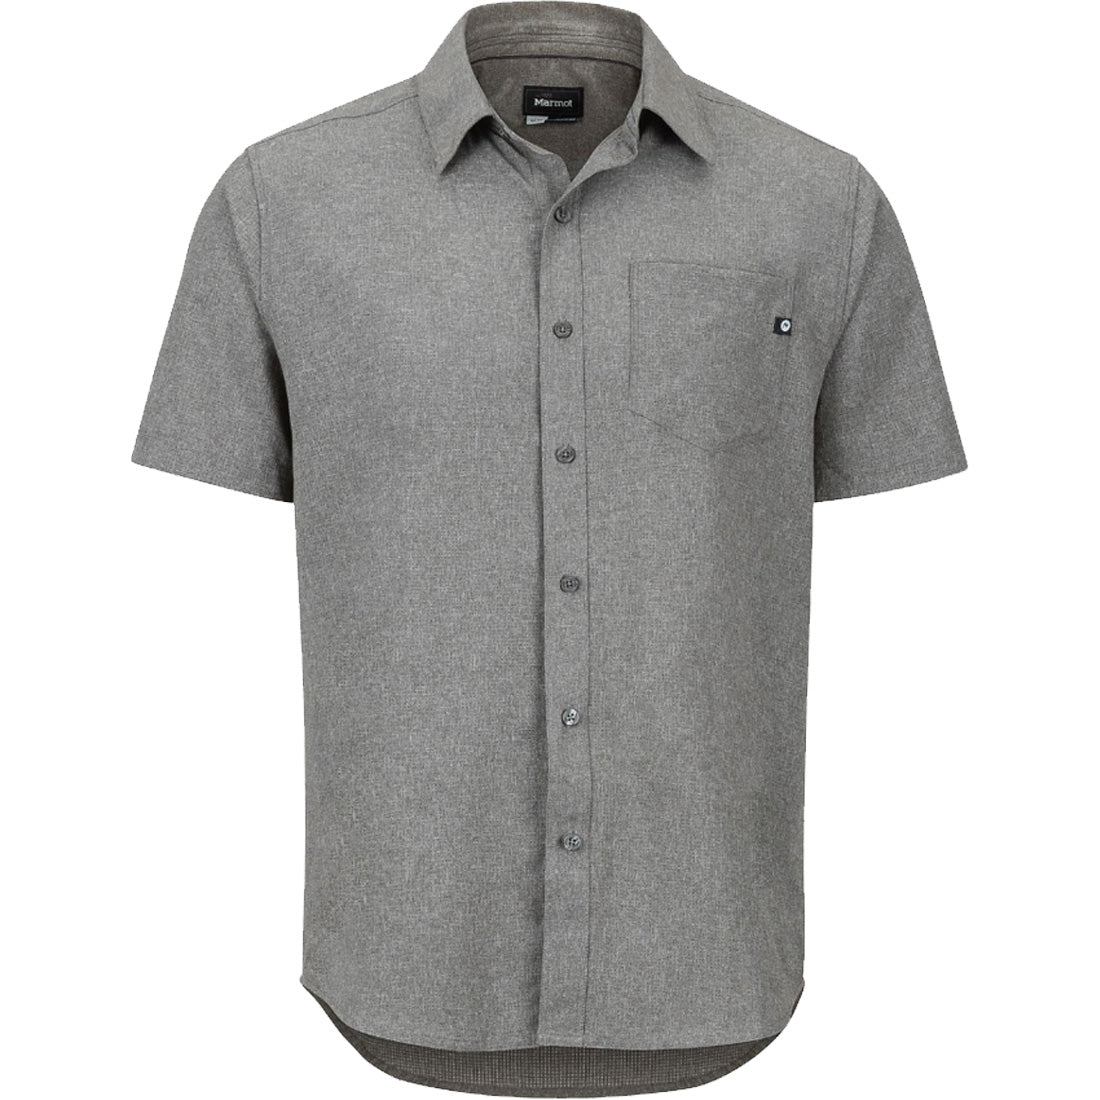 Marmot Aerobora Short Sleeve Shirt - Men's